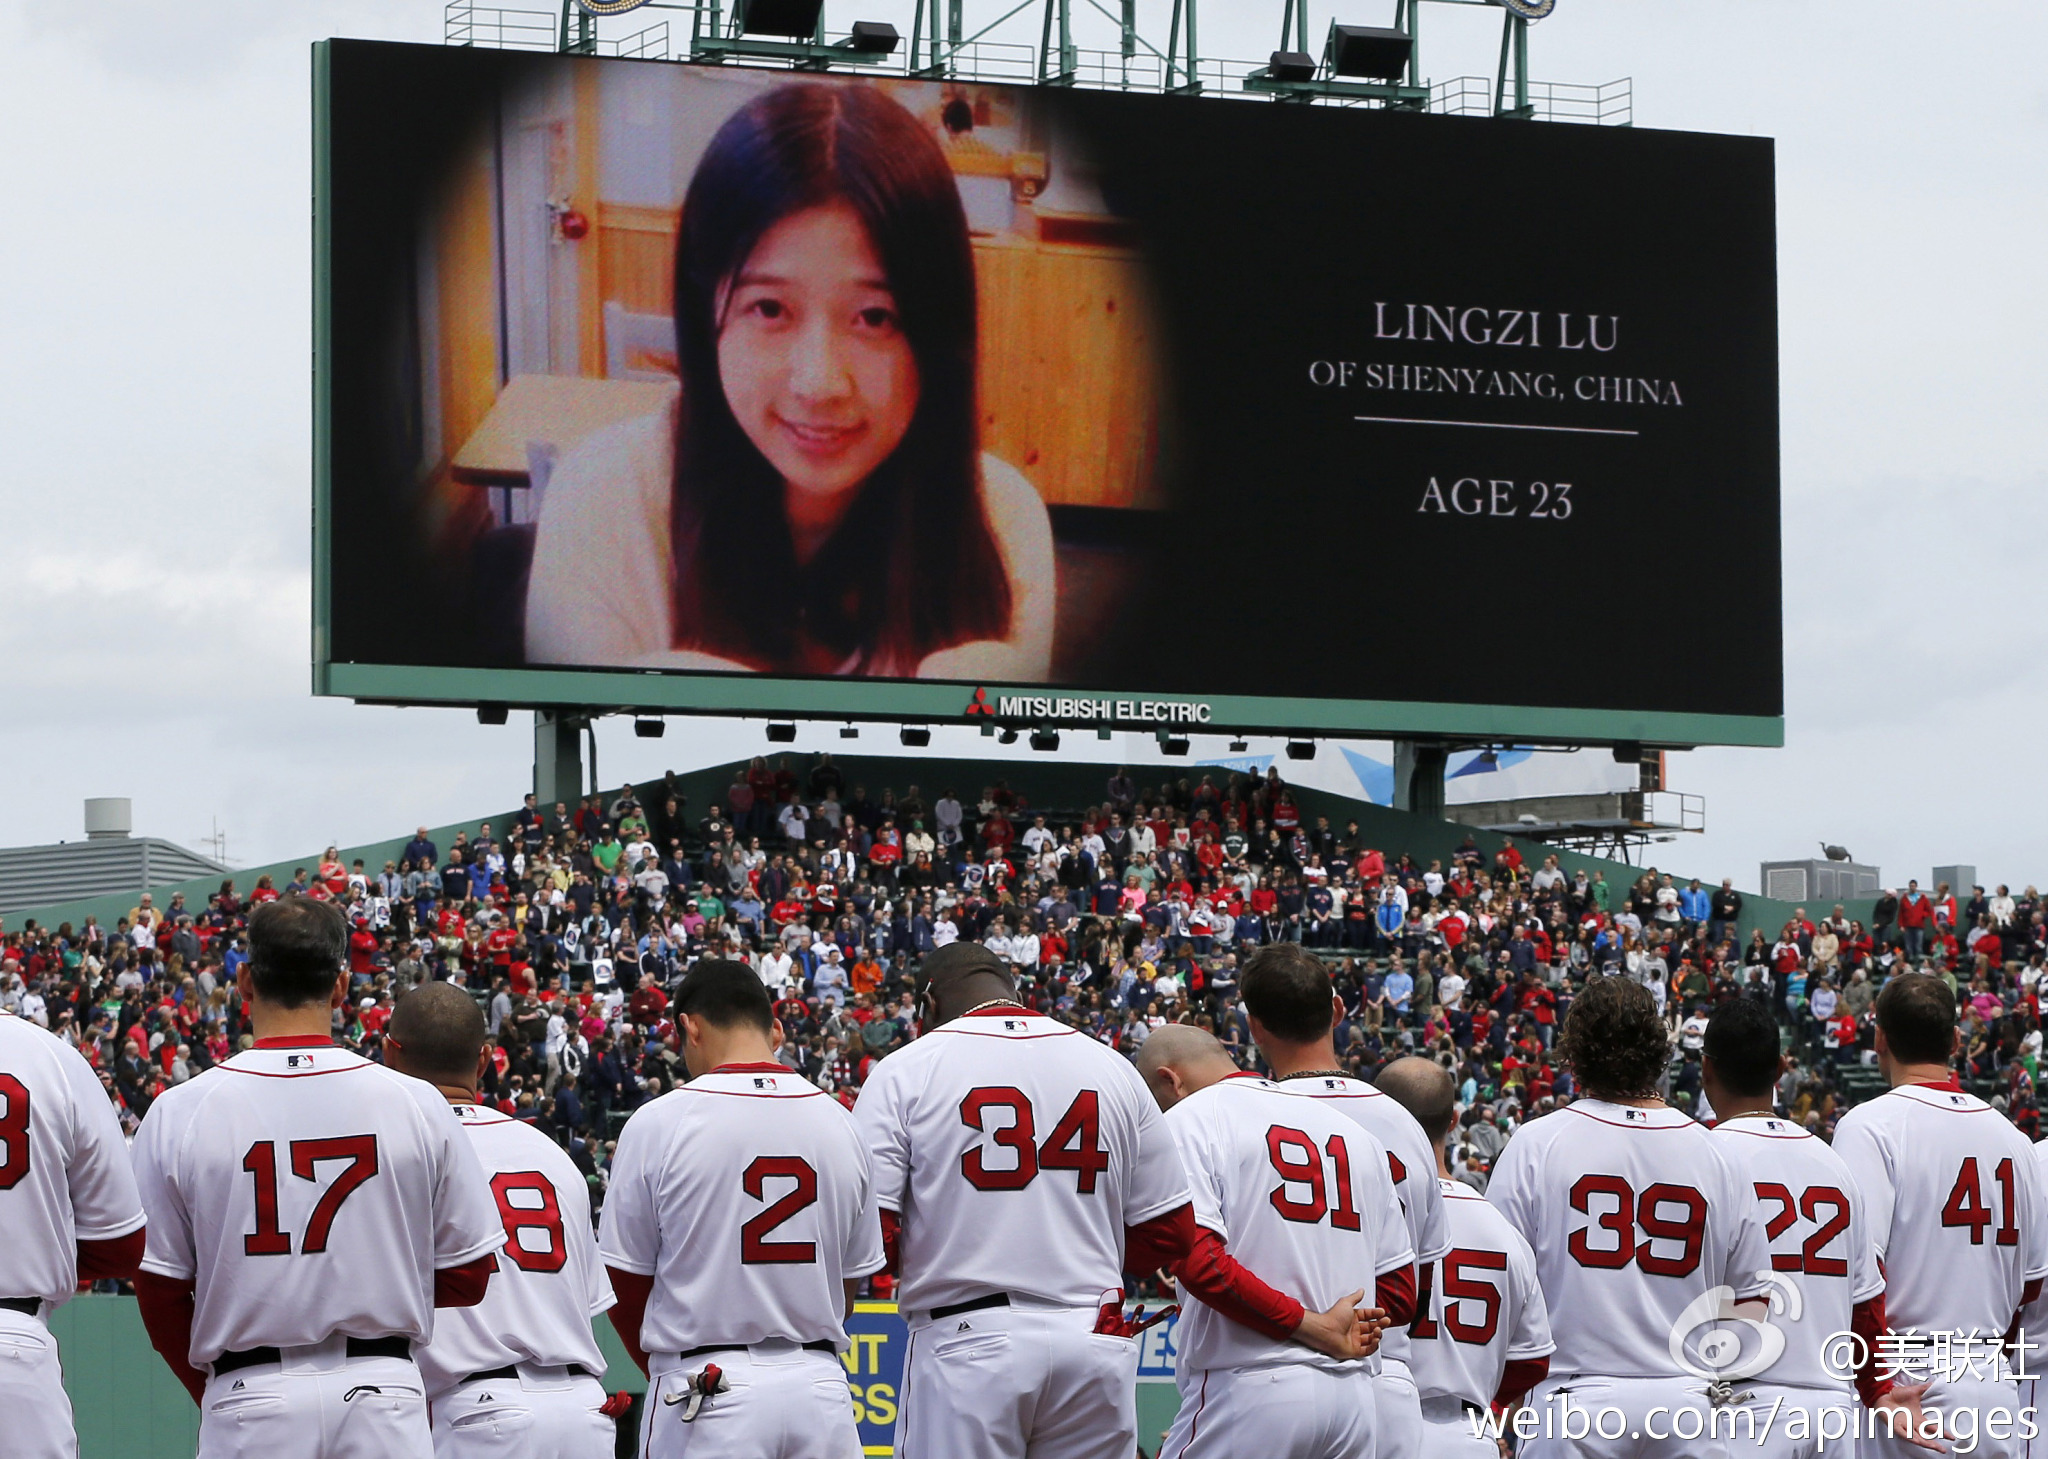 boston-red-sox-baseball-game-lu-lingzi-overseas-chinese-student-victim-of-boston-marathon-bombings-remembered-ap-photo.jpg